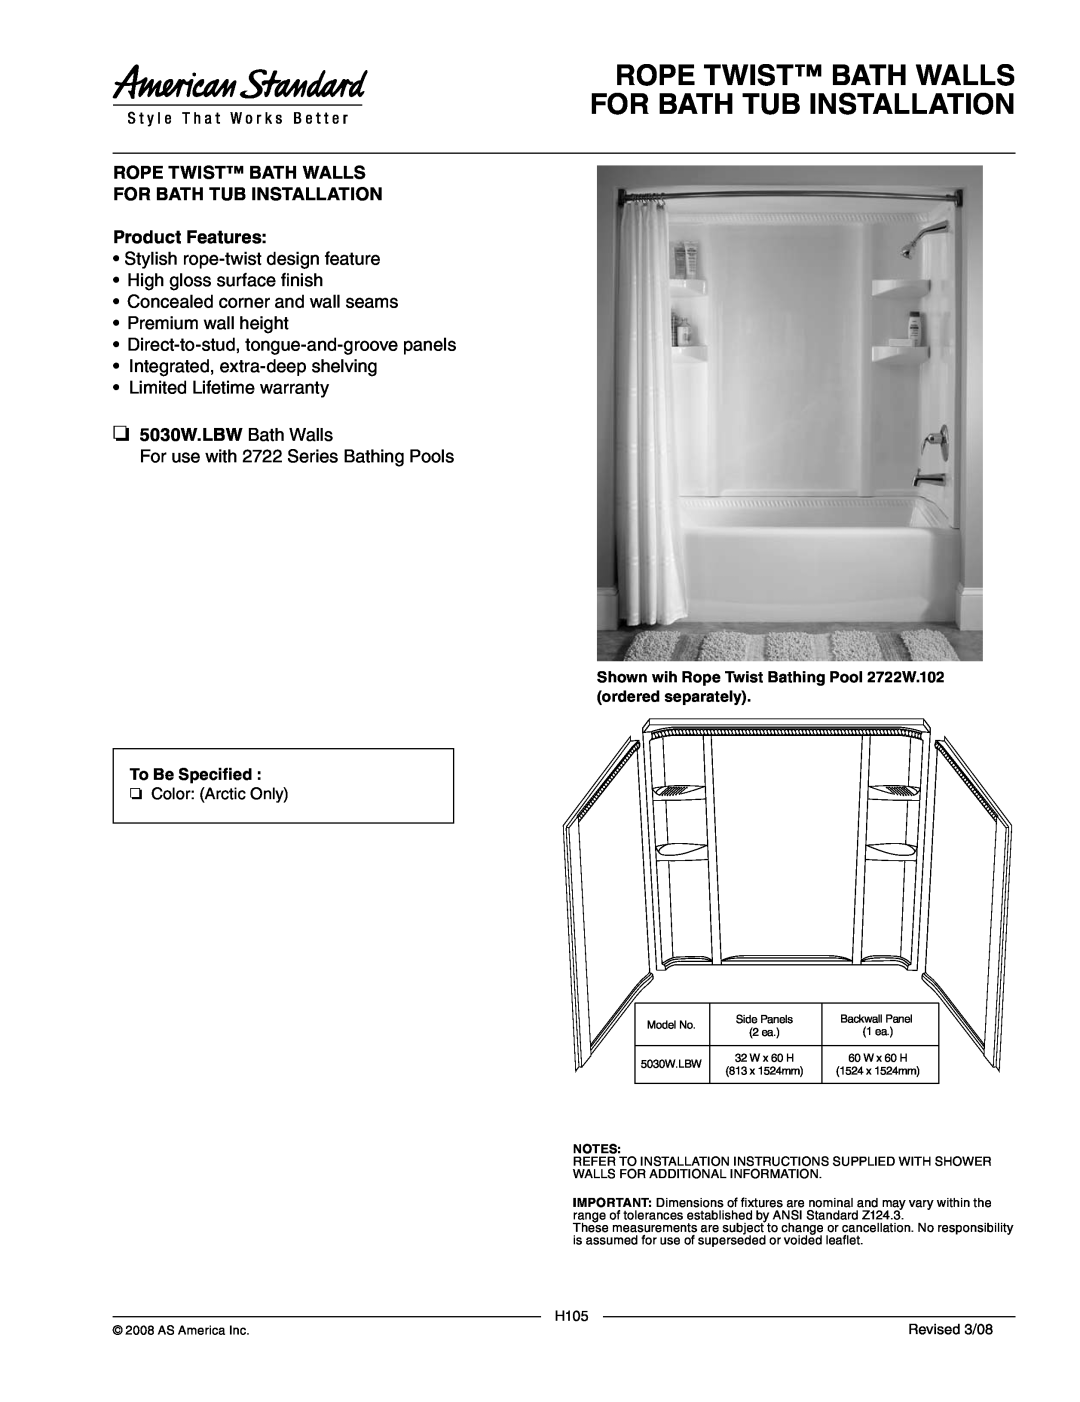 American Standard 5030W.LBW warranty H105 Revised 3/08, Rope Twist Bath Walls For Bath Tub Installation, Product Features 